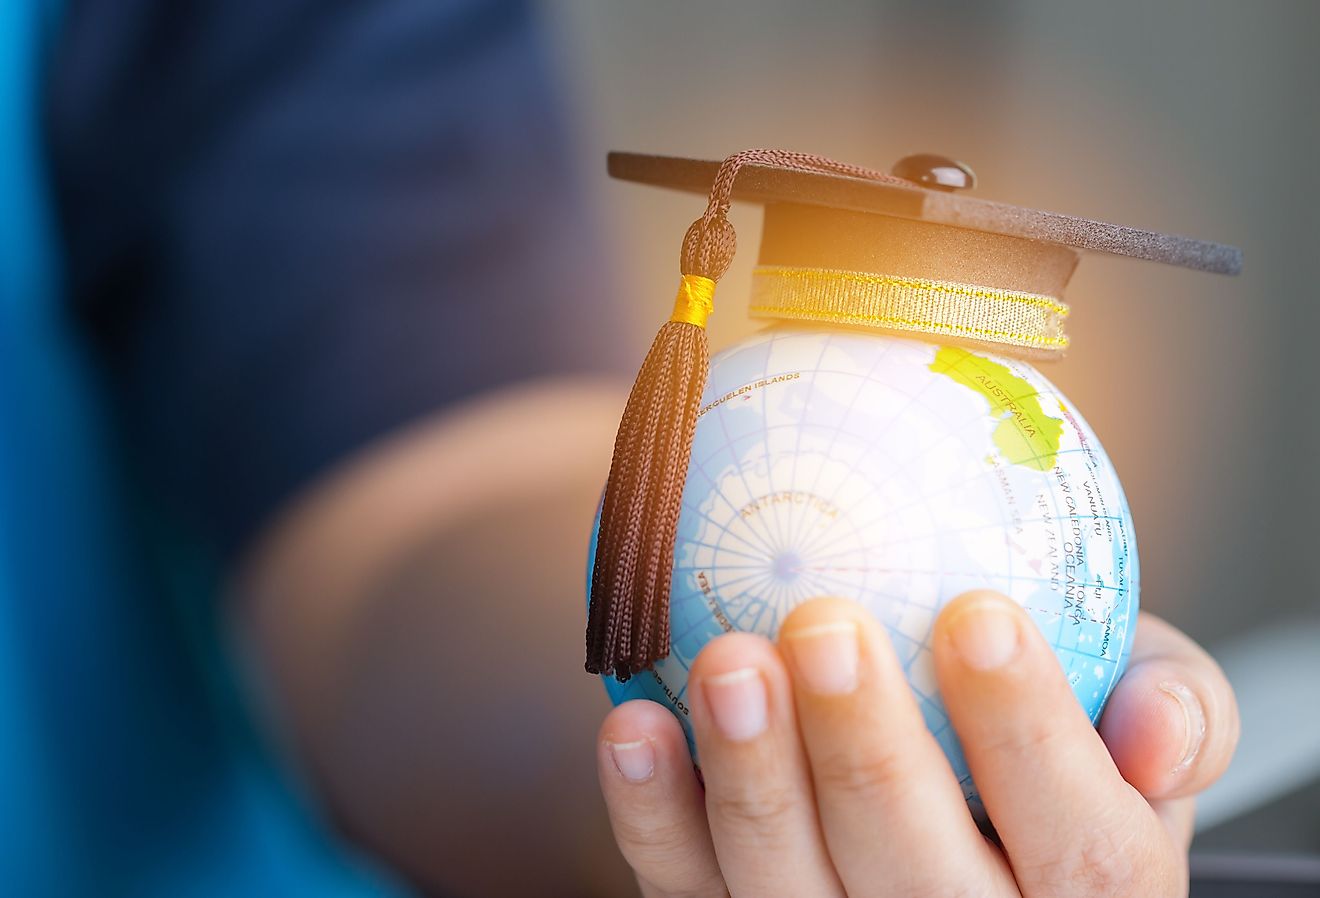 Education around the globe. Image credit: smolaw via Shutterstock